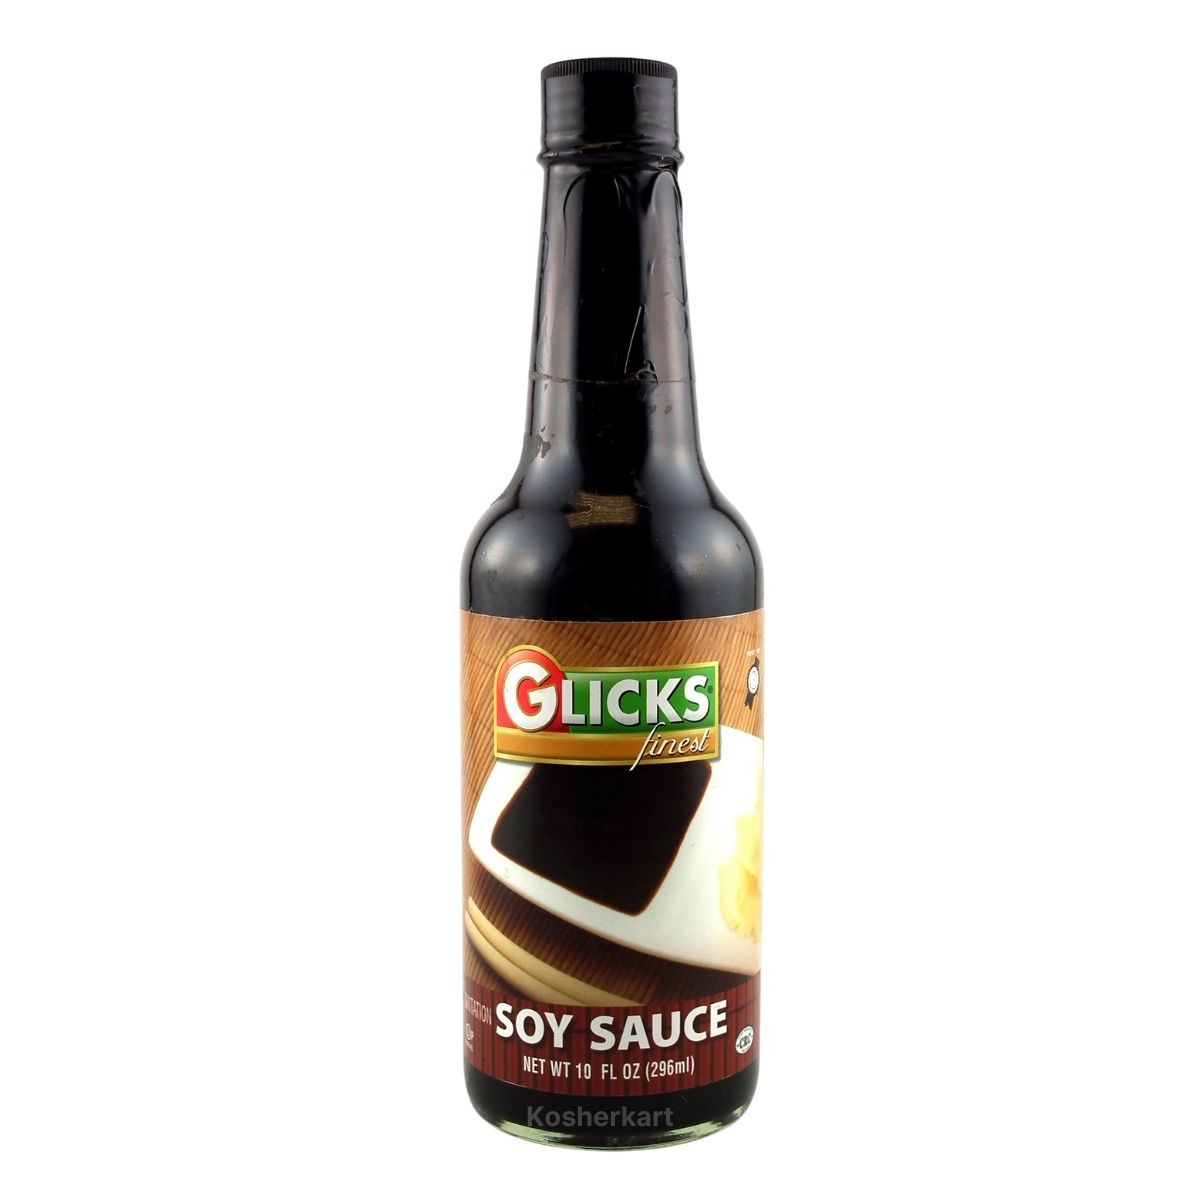 Glicks Imitation Soy Sauce 10 oz